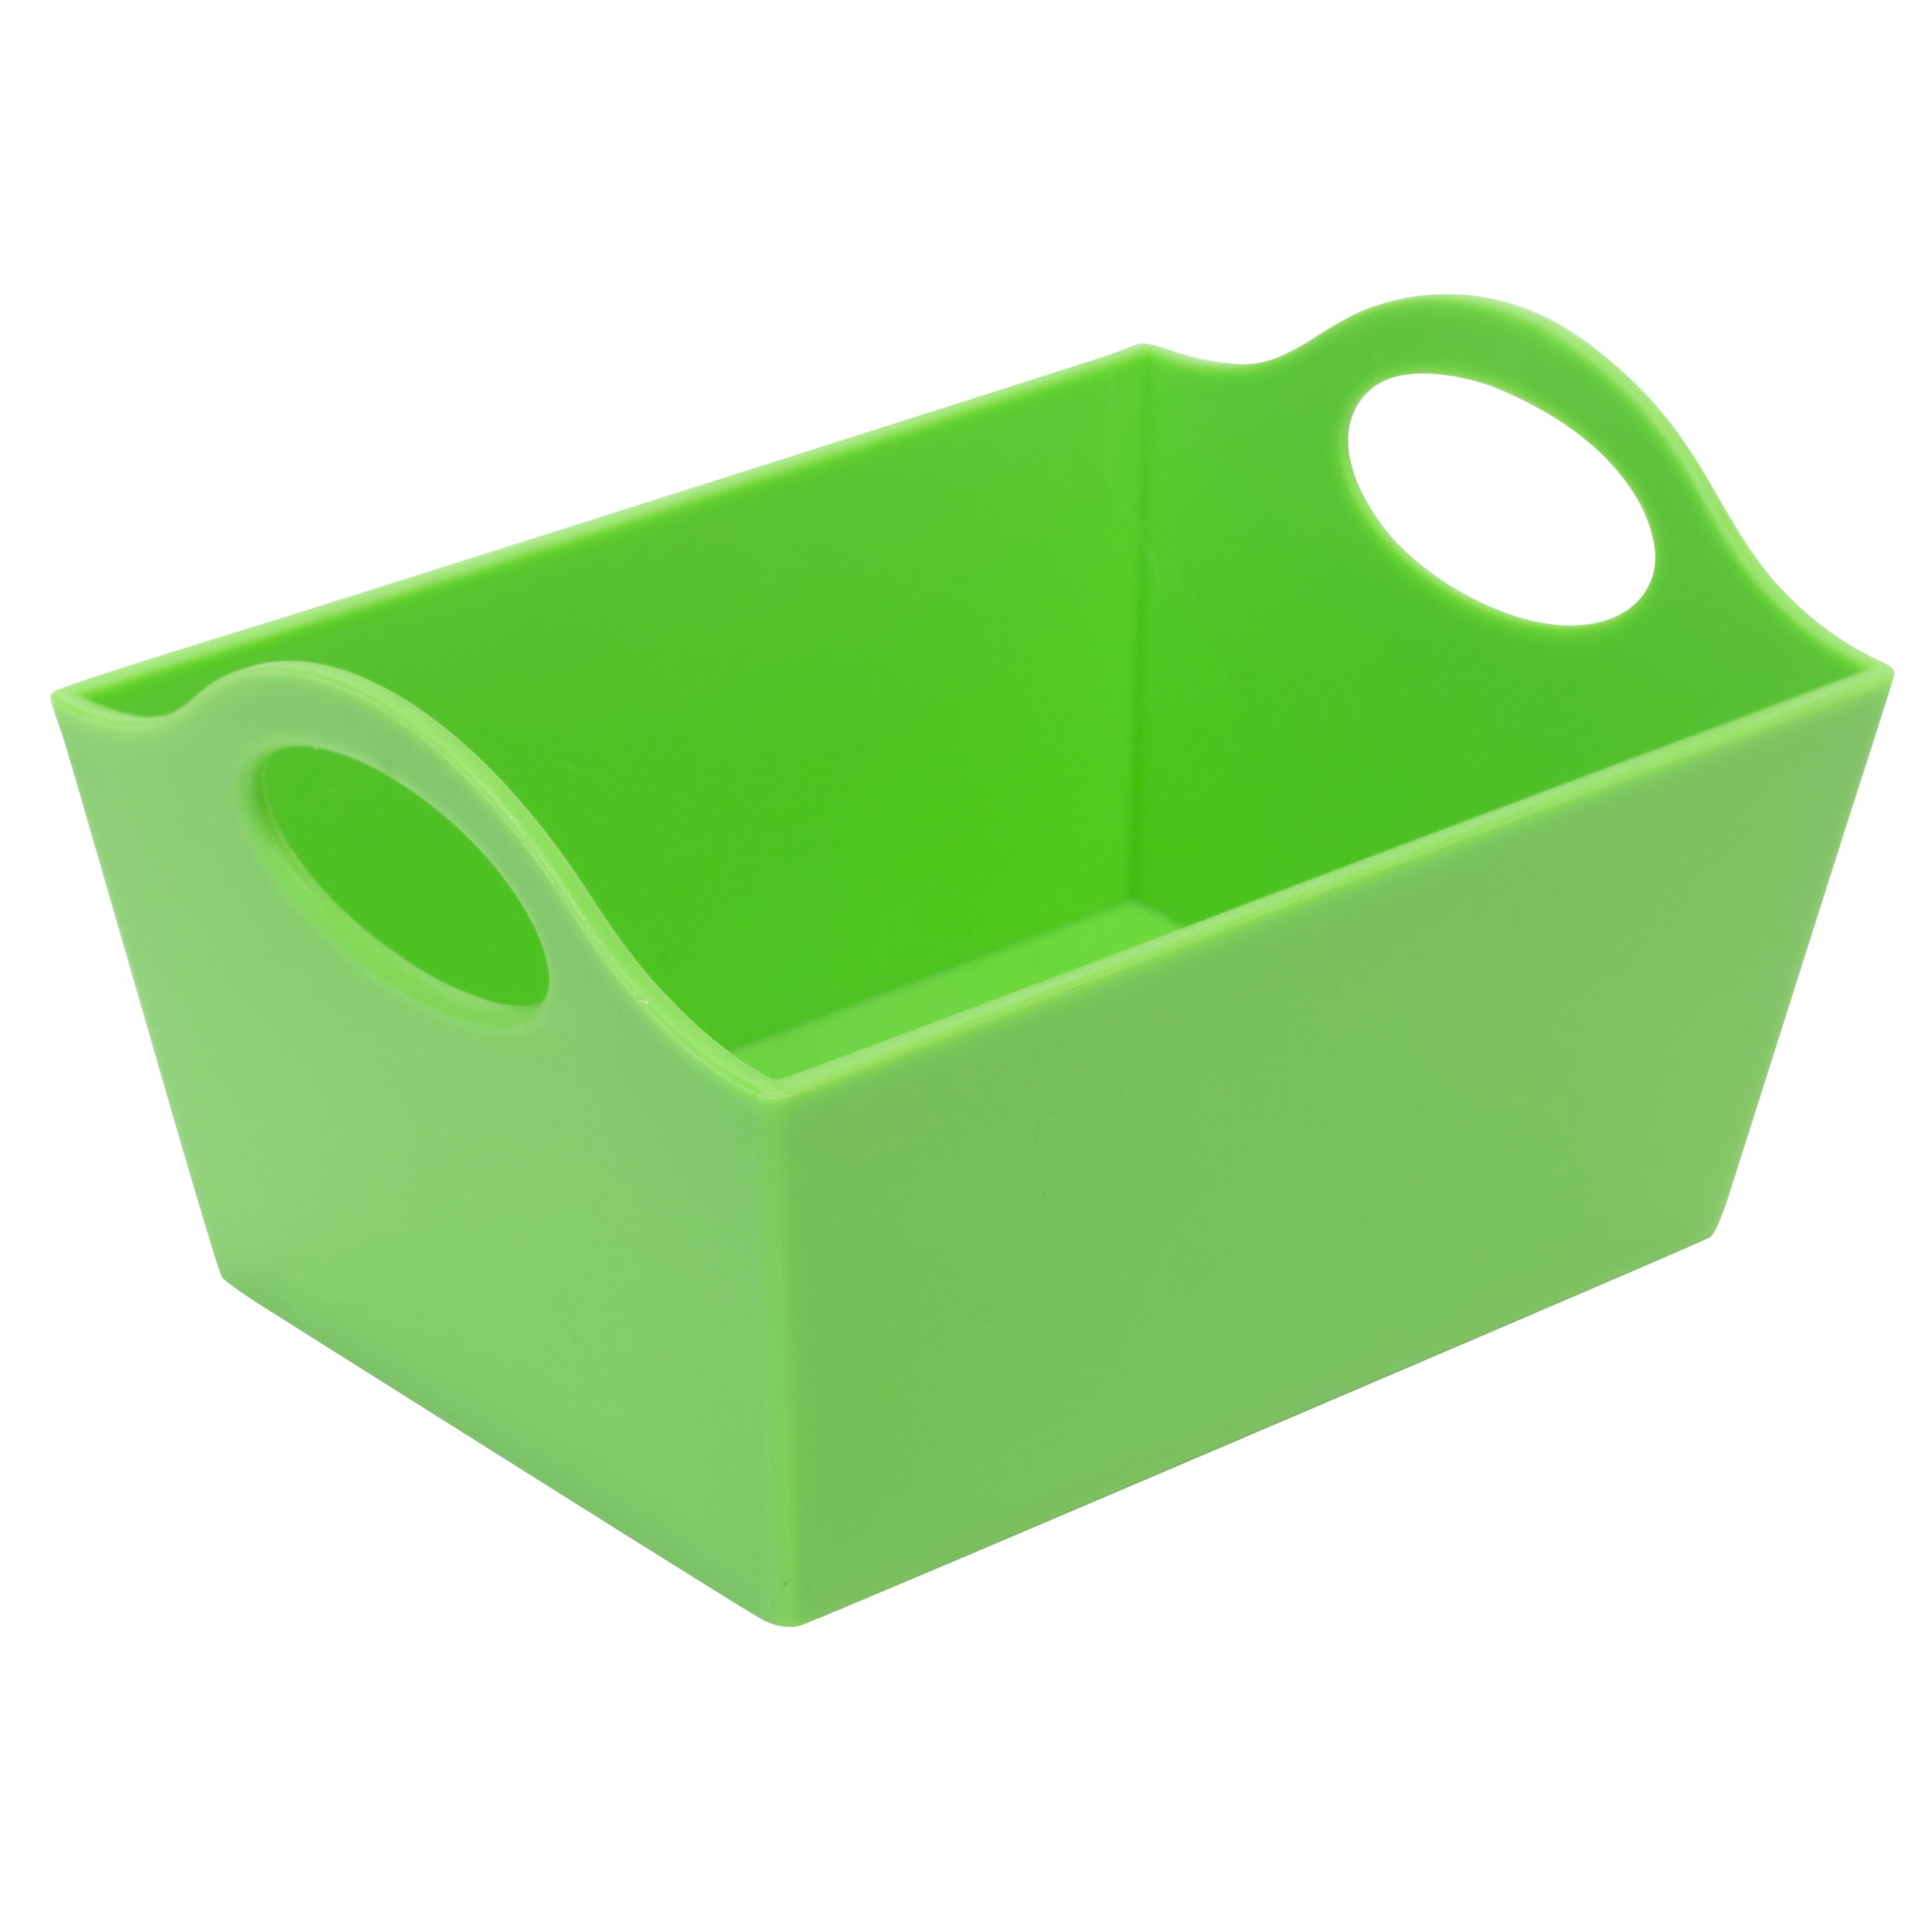 Welaxy welaxy designed felt office storage bins drawer organizers dividers  boxes shelf bin, pack of 5 (green)